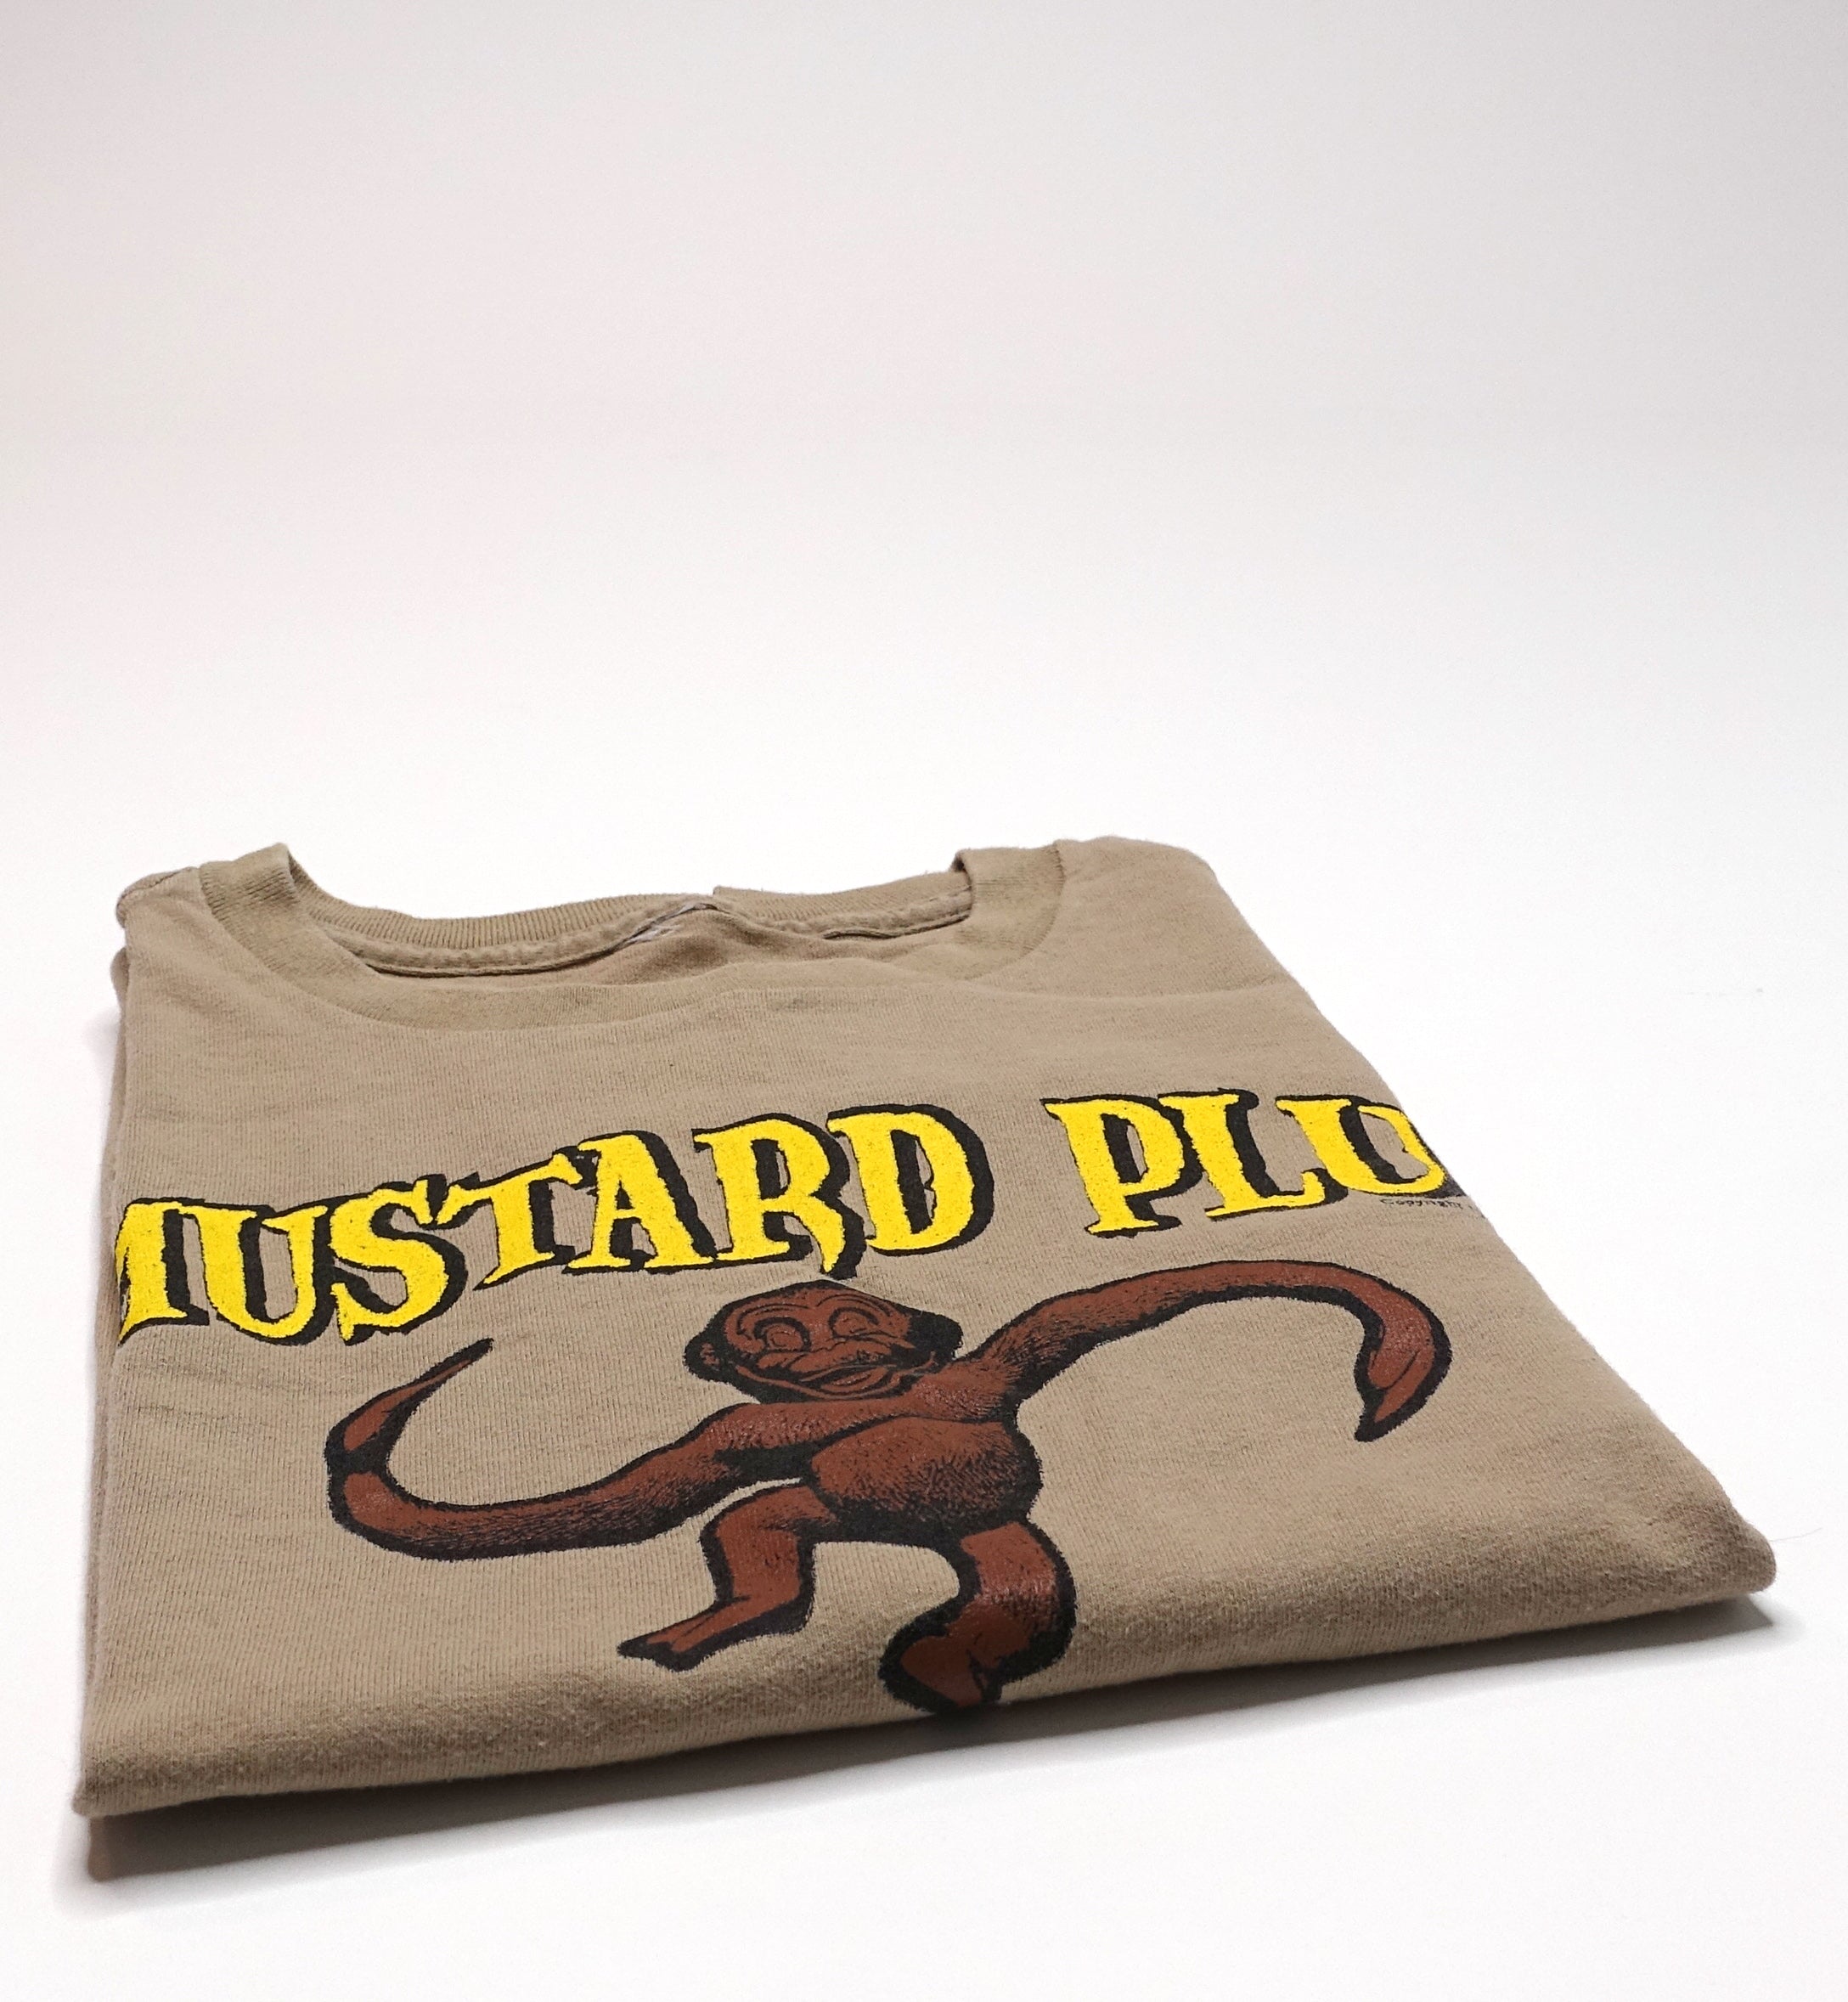 Mustard Plug – Pray For Mojo 1999 Tour Shirt Size Large